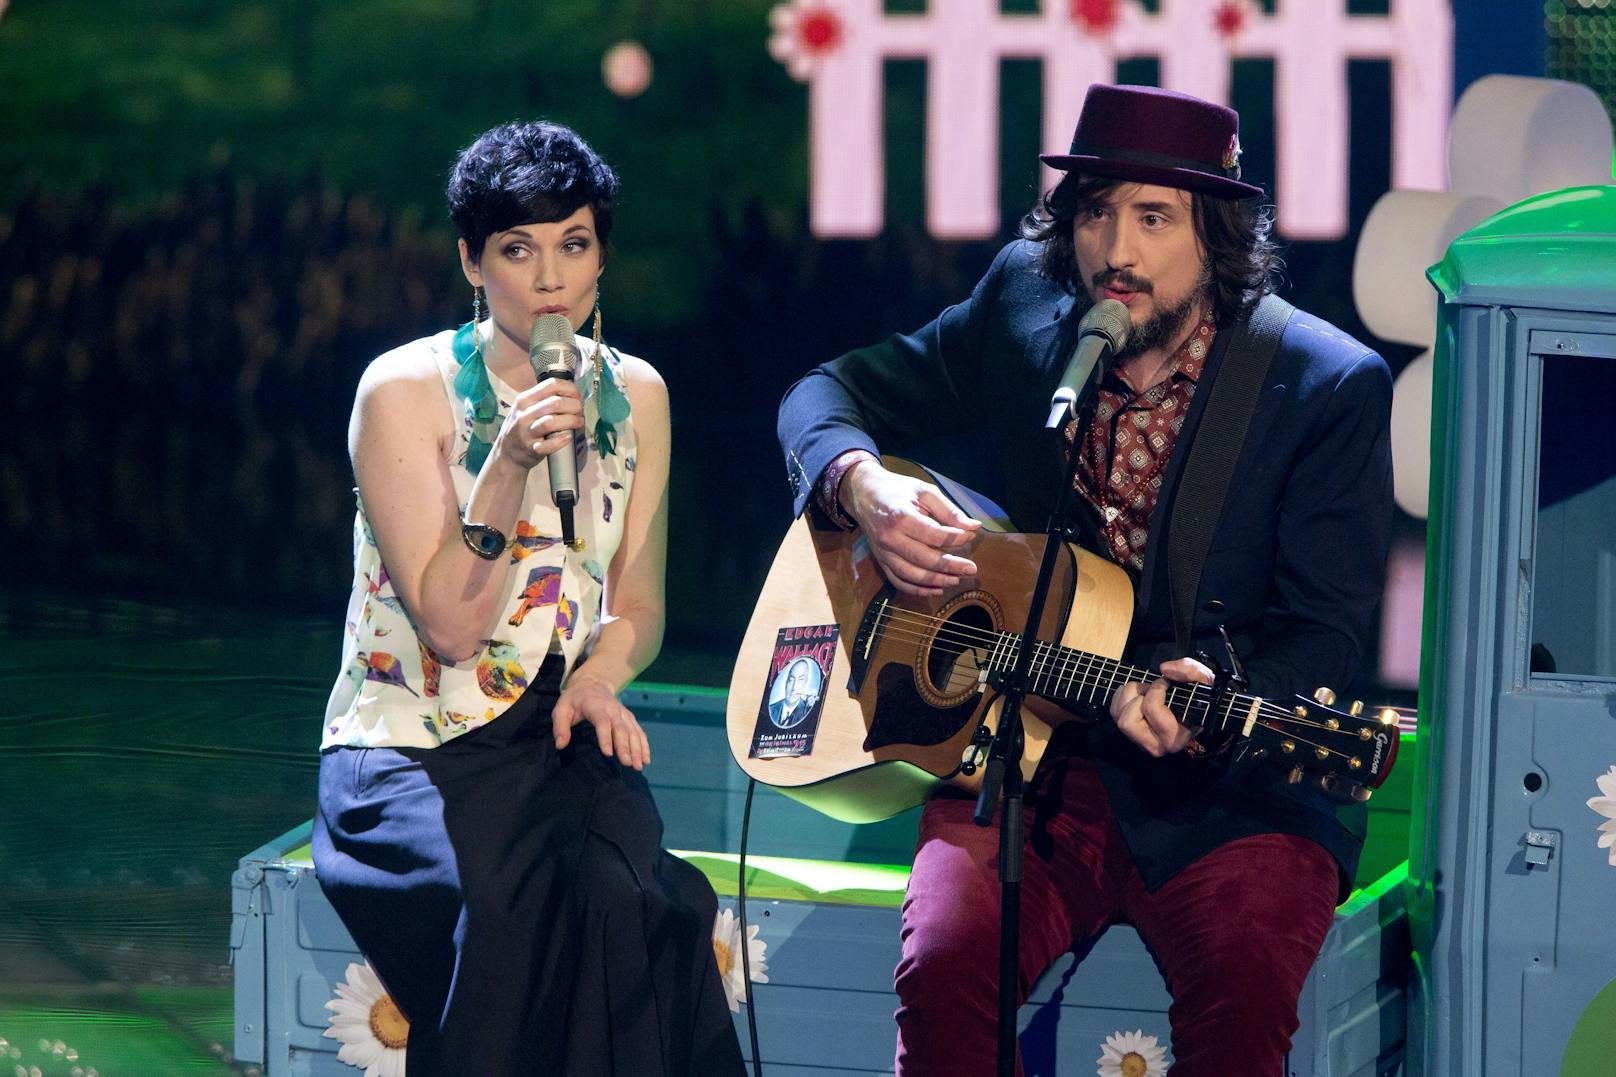 "Mrs Greenbird": Sarah (links) und Steffen Brückner beim Finale der dritten Staffel der Castingshow "X Factor" 2012